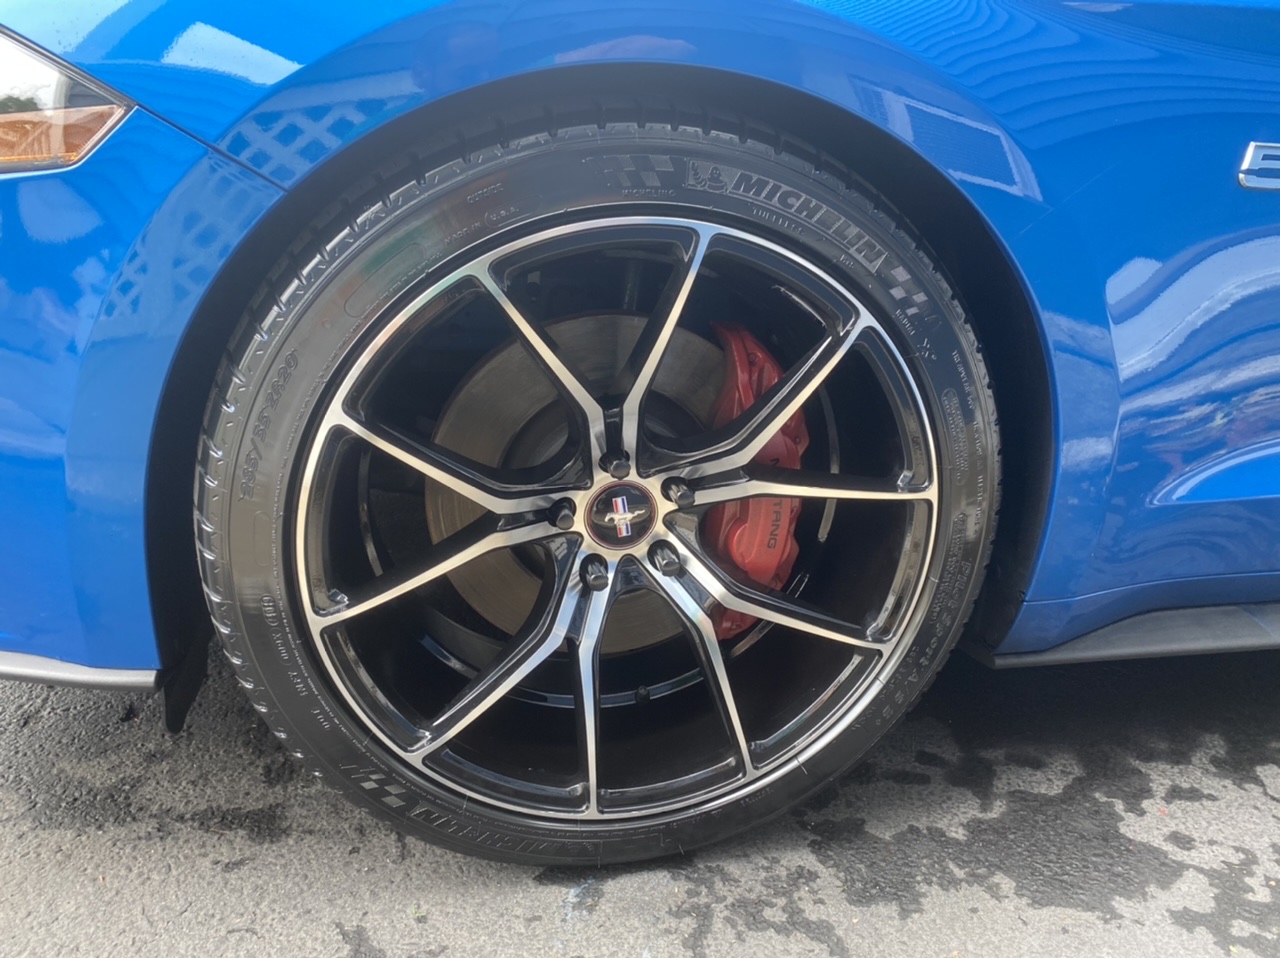 Dura-Coating -Long lasting tire shine